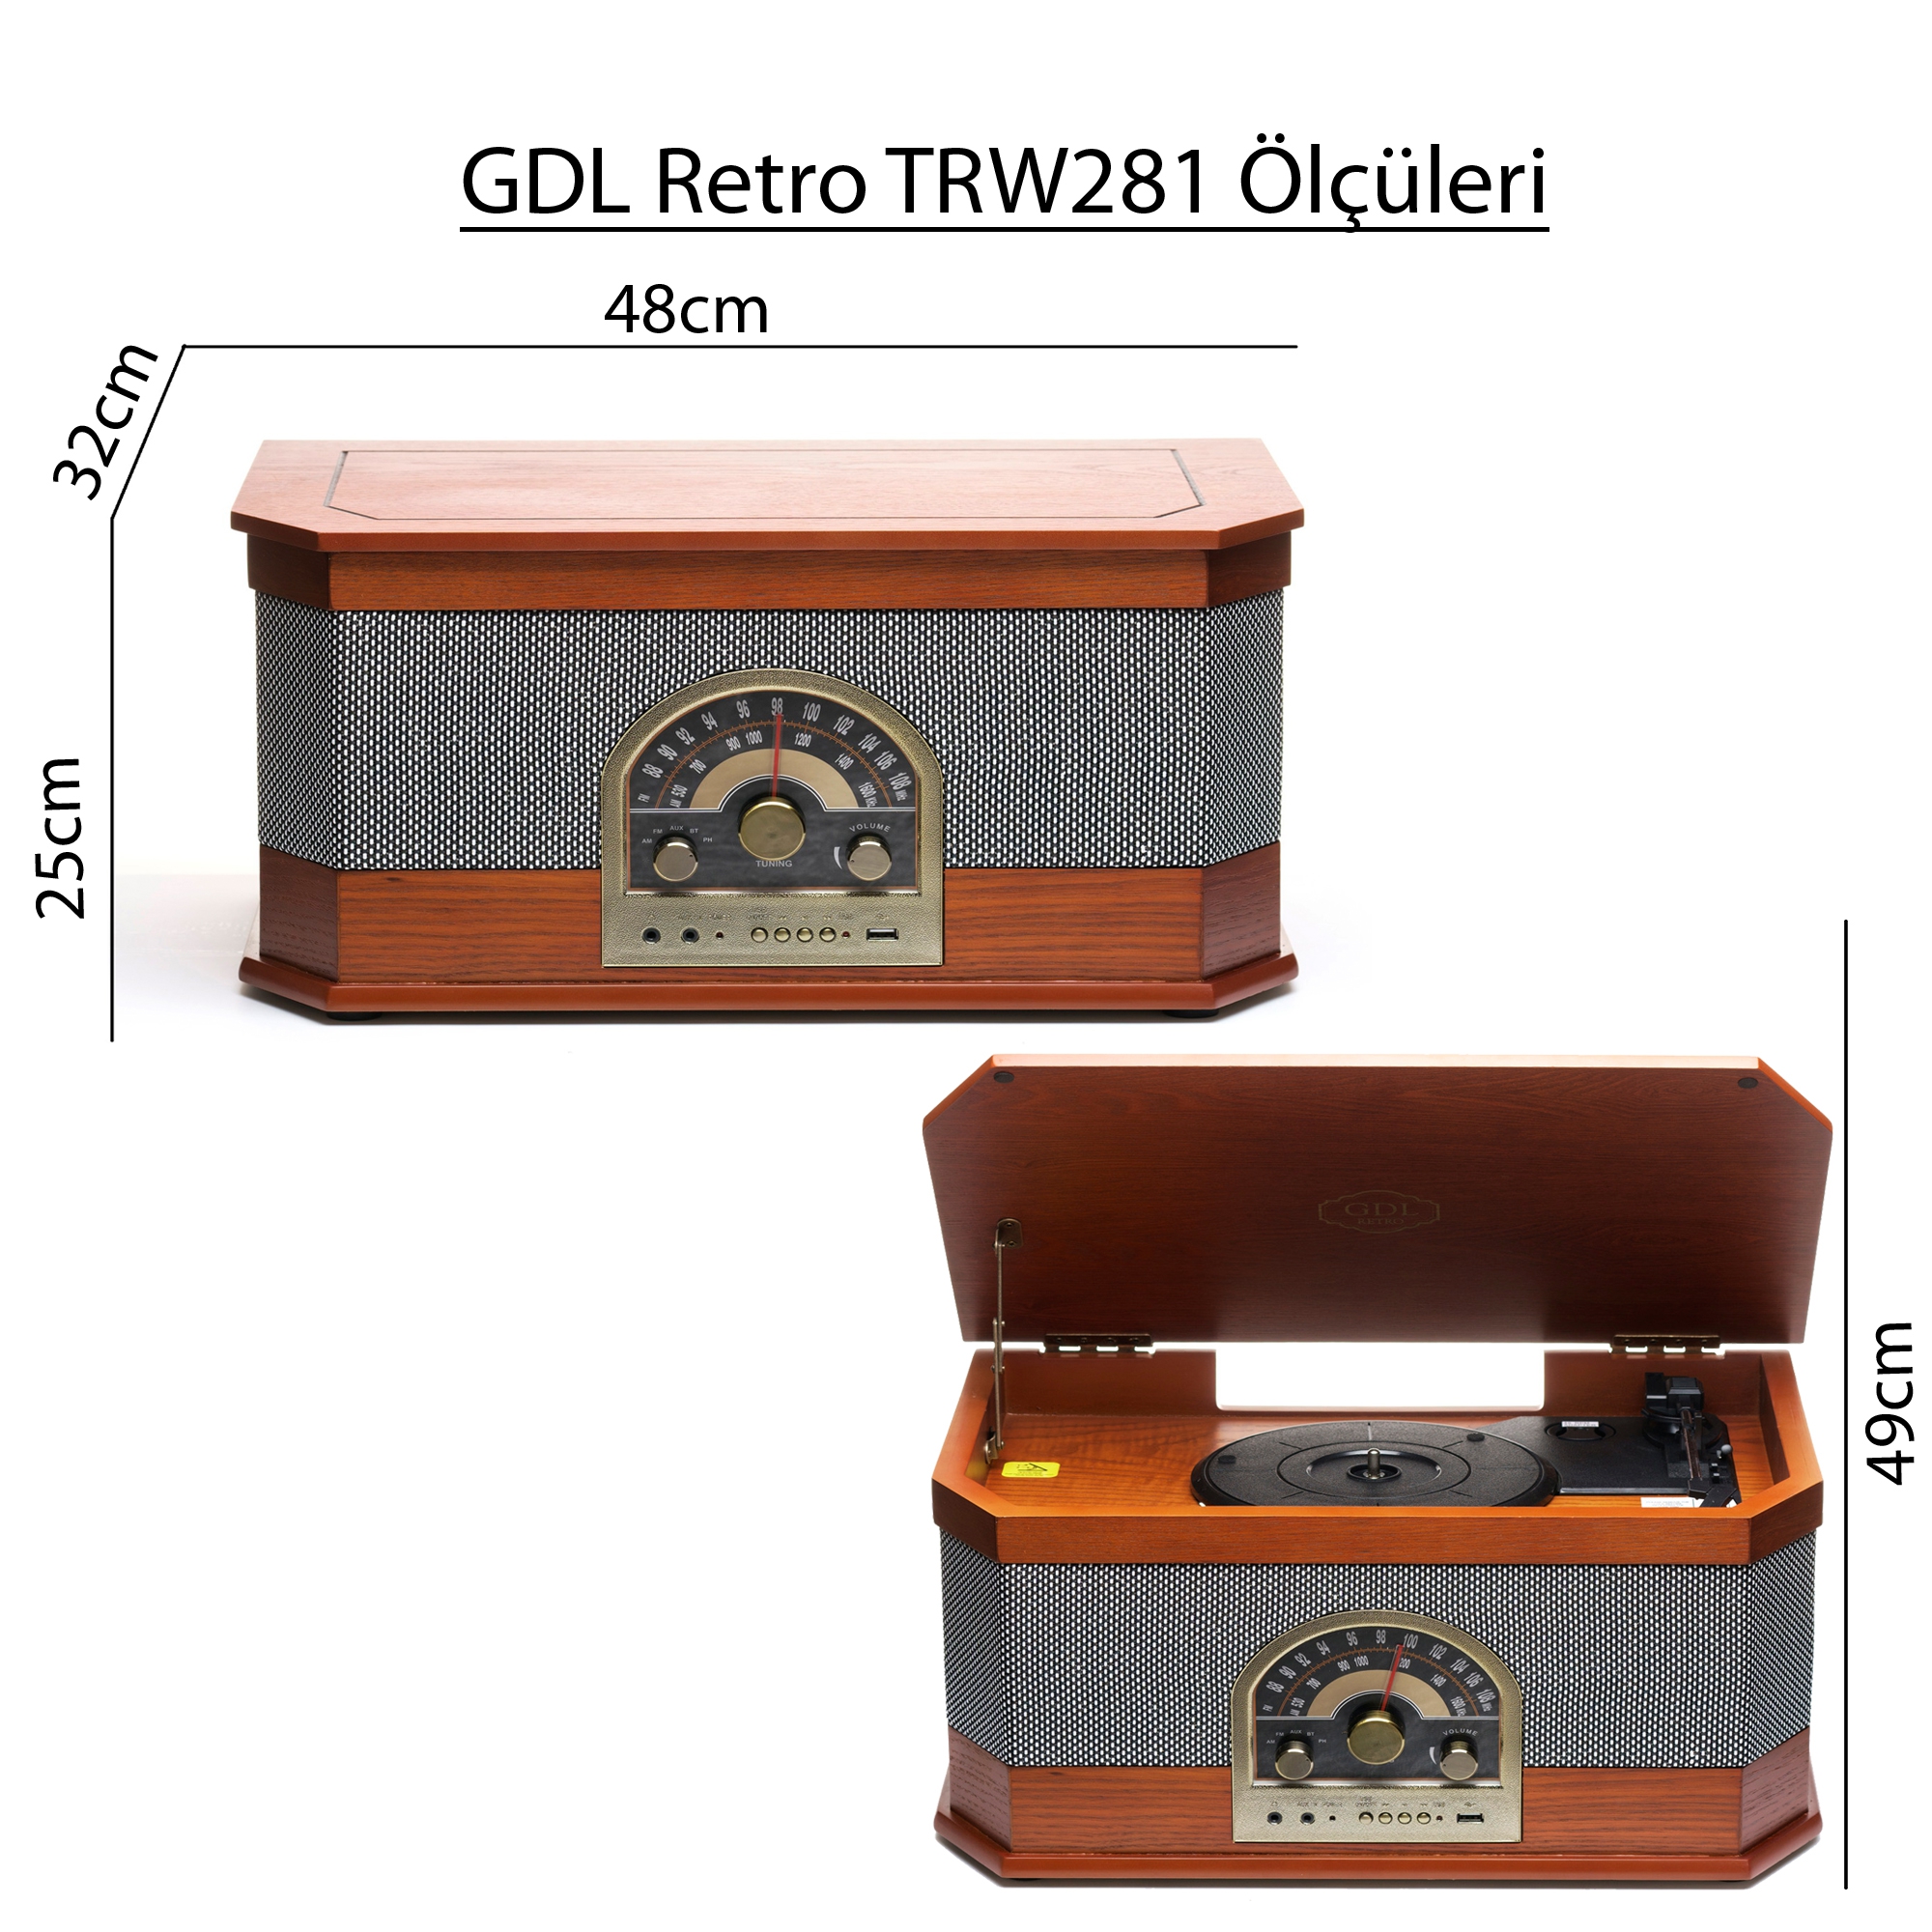 GDL Retro TR-W281 Nostaljik Pikap (Radyo - Bluetooth - USB Çalar)